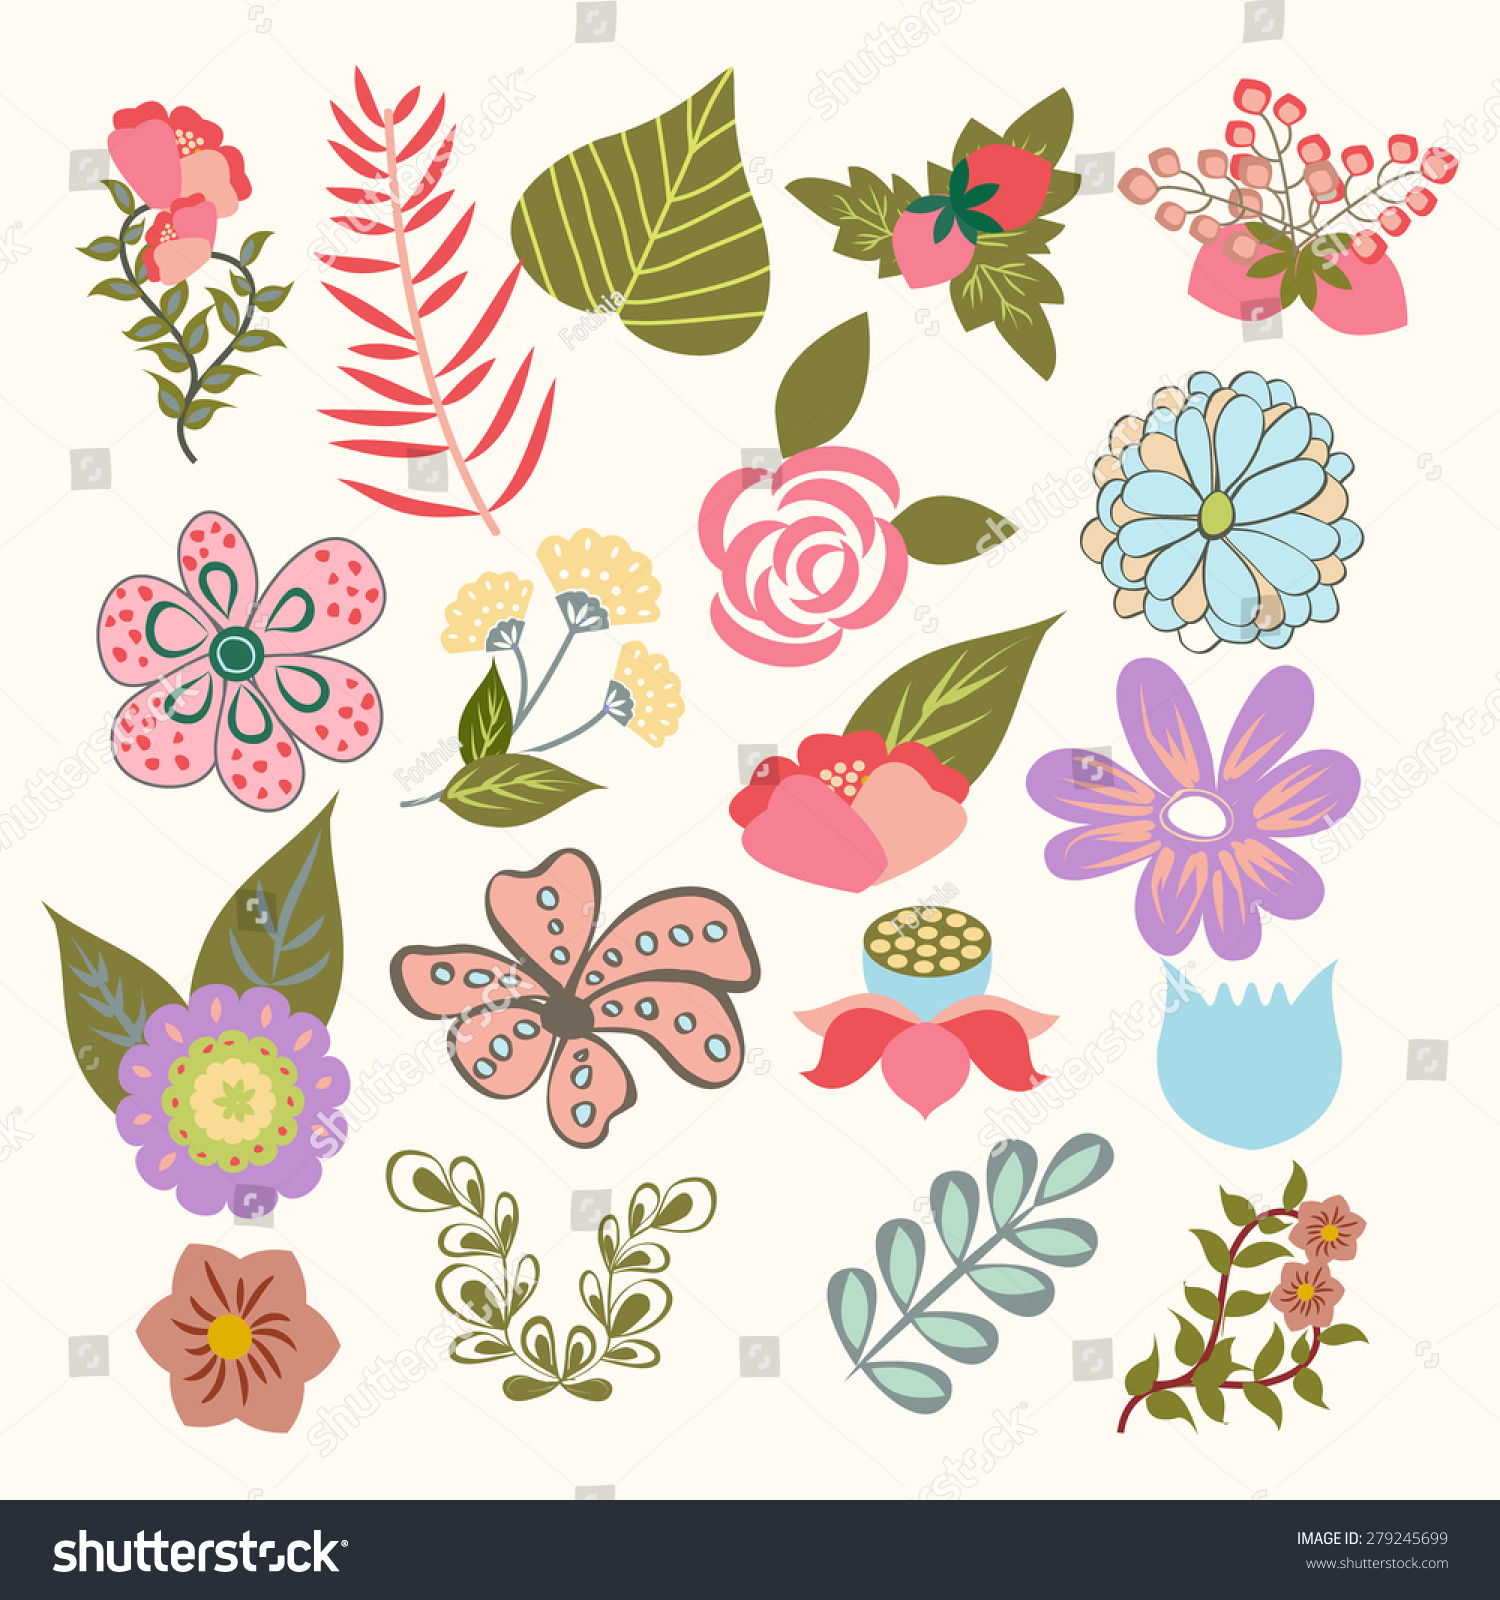 Edit Vectors Free Online - Floral | Shutterstock Editor